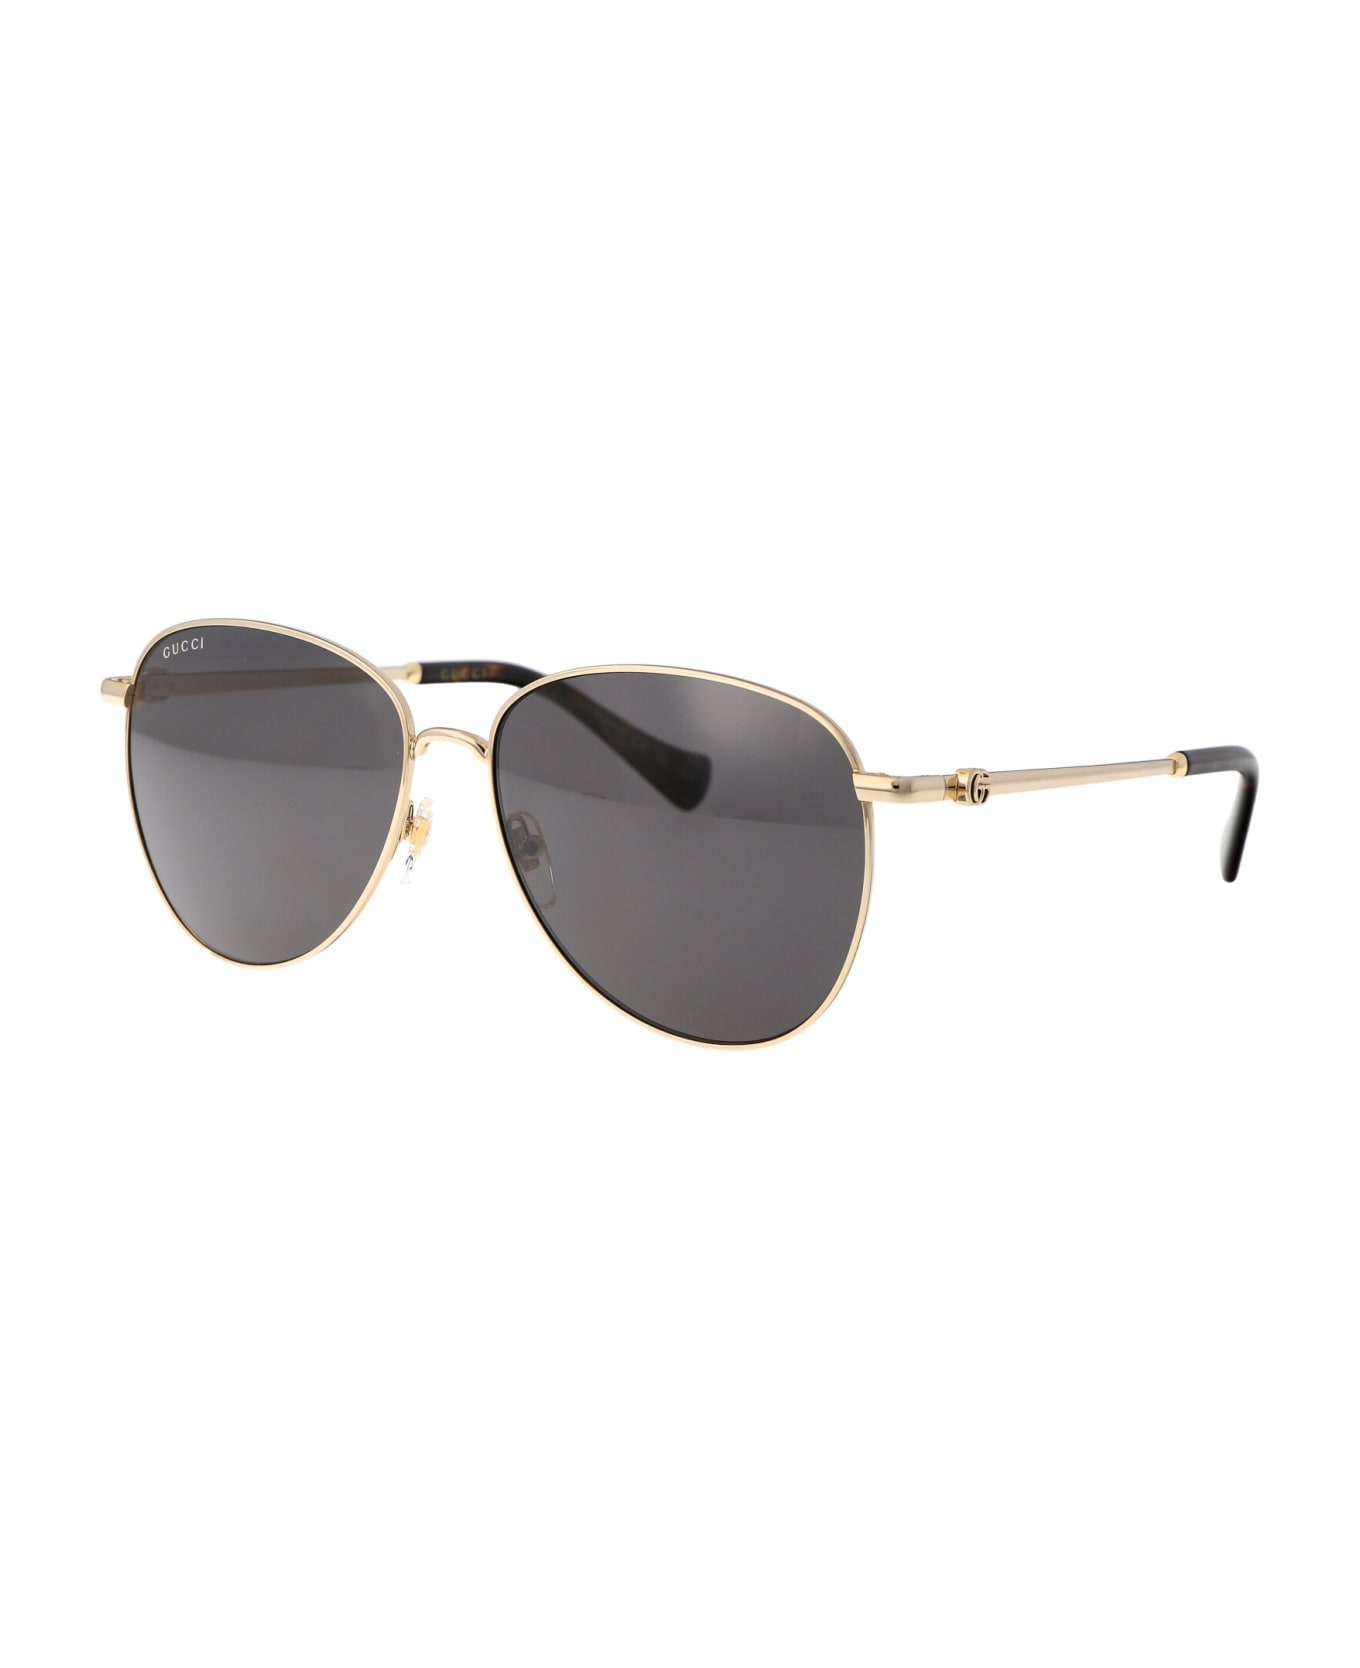 Gucci Eyewear Gg1419s Sunglasses - 001 GOLD GOLD GREY